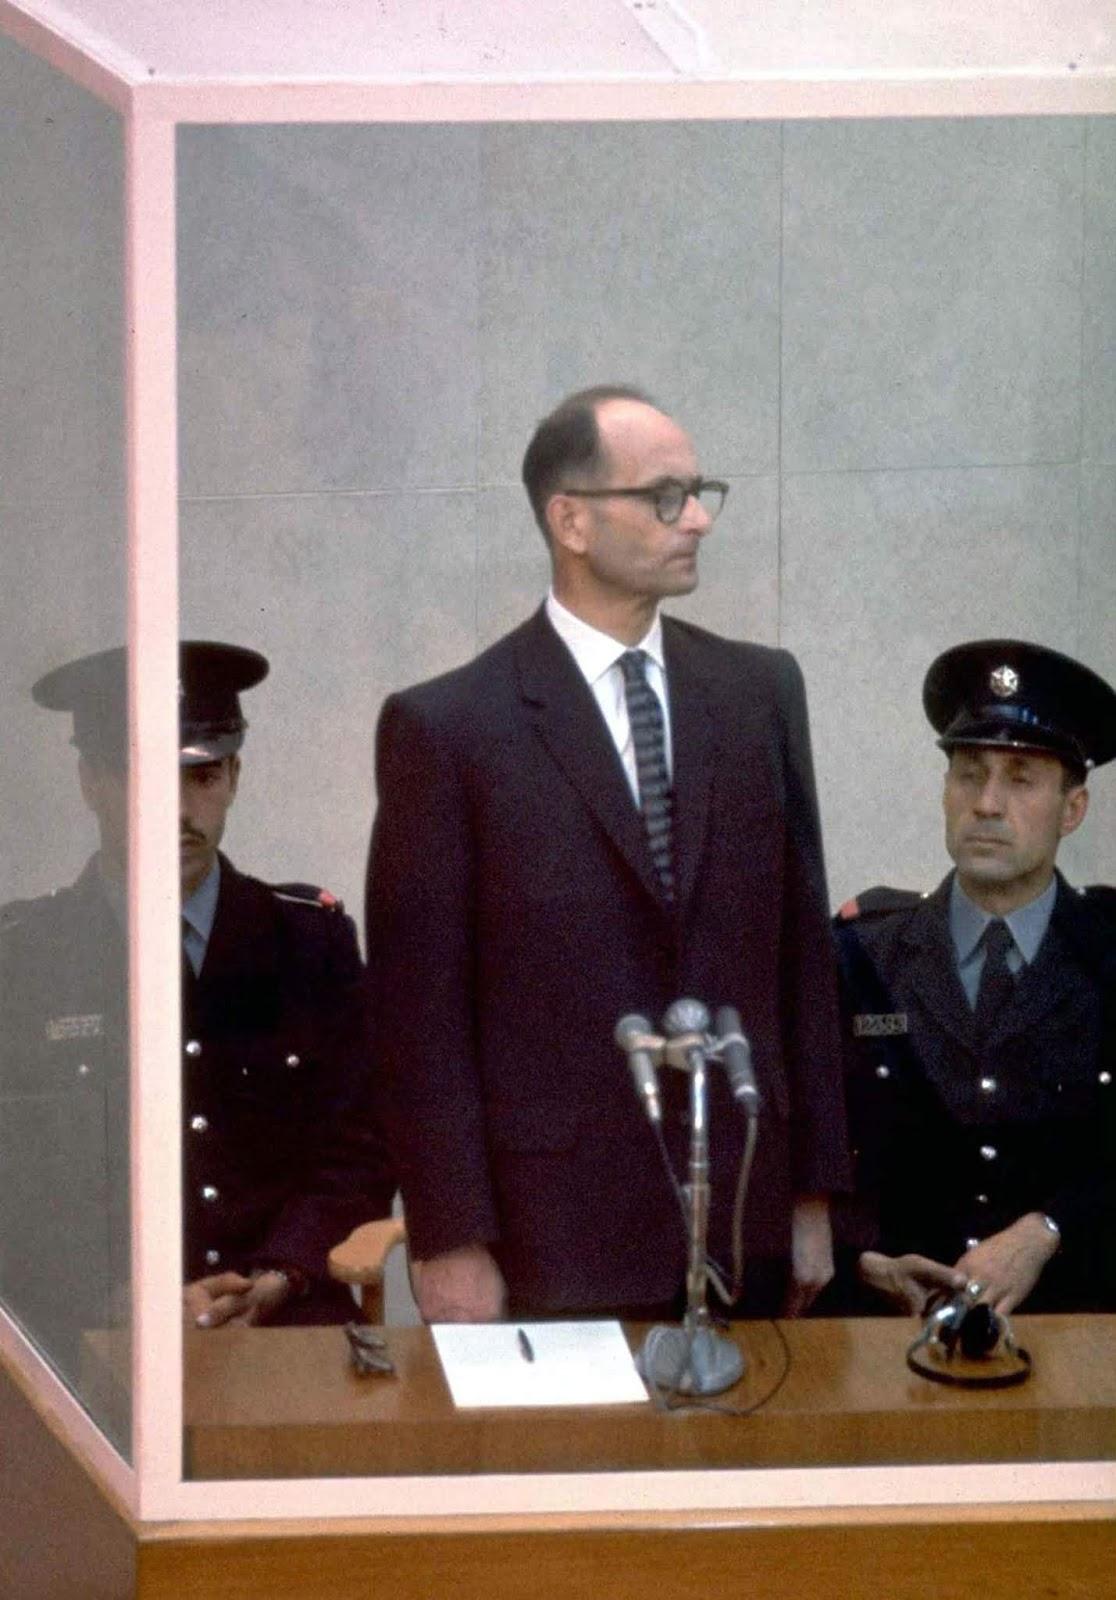 La chasse au criminel de guerre nazi Adolf Eichmann, 1961